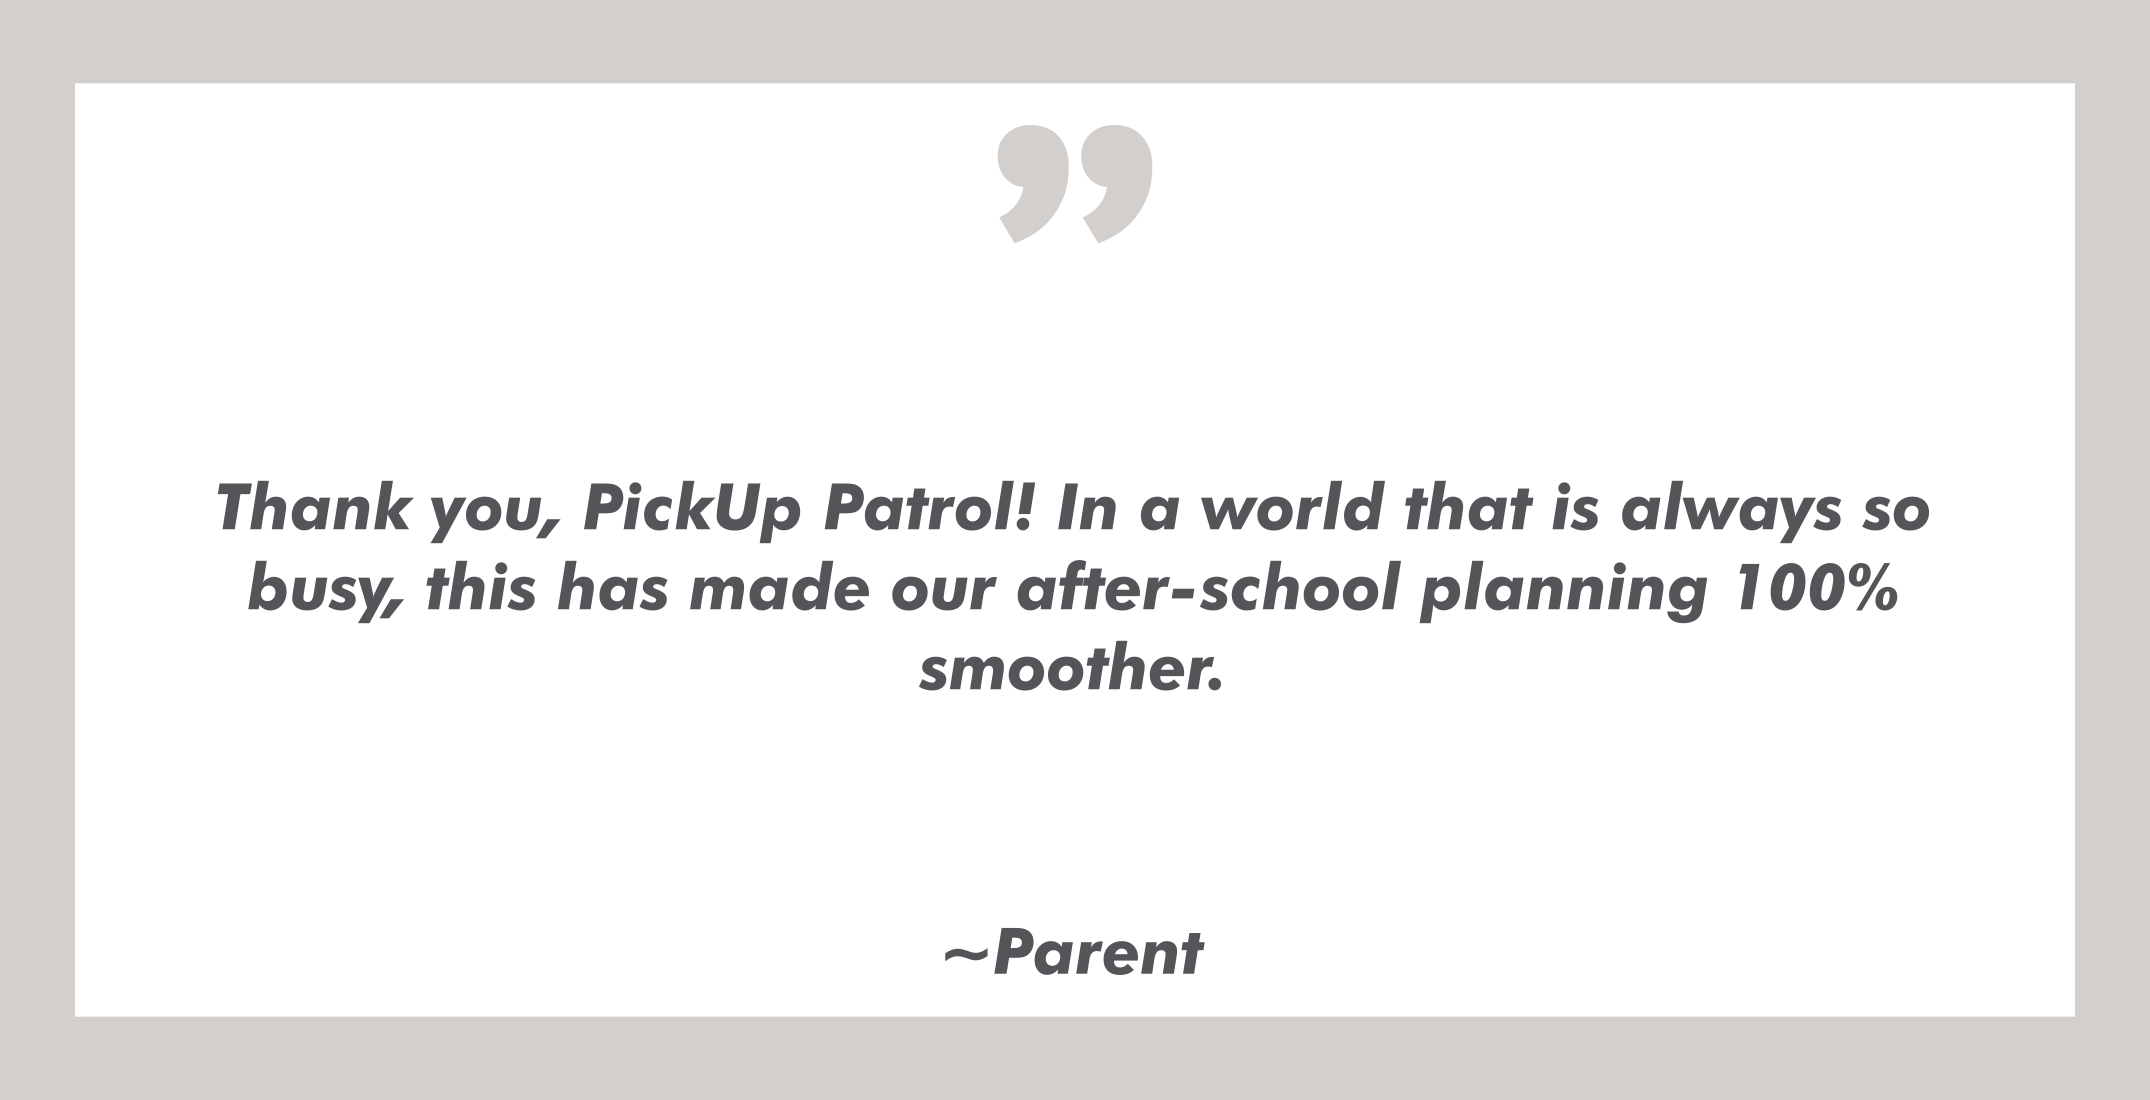 PickUp Patrol school dismissal app testimonial from parent